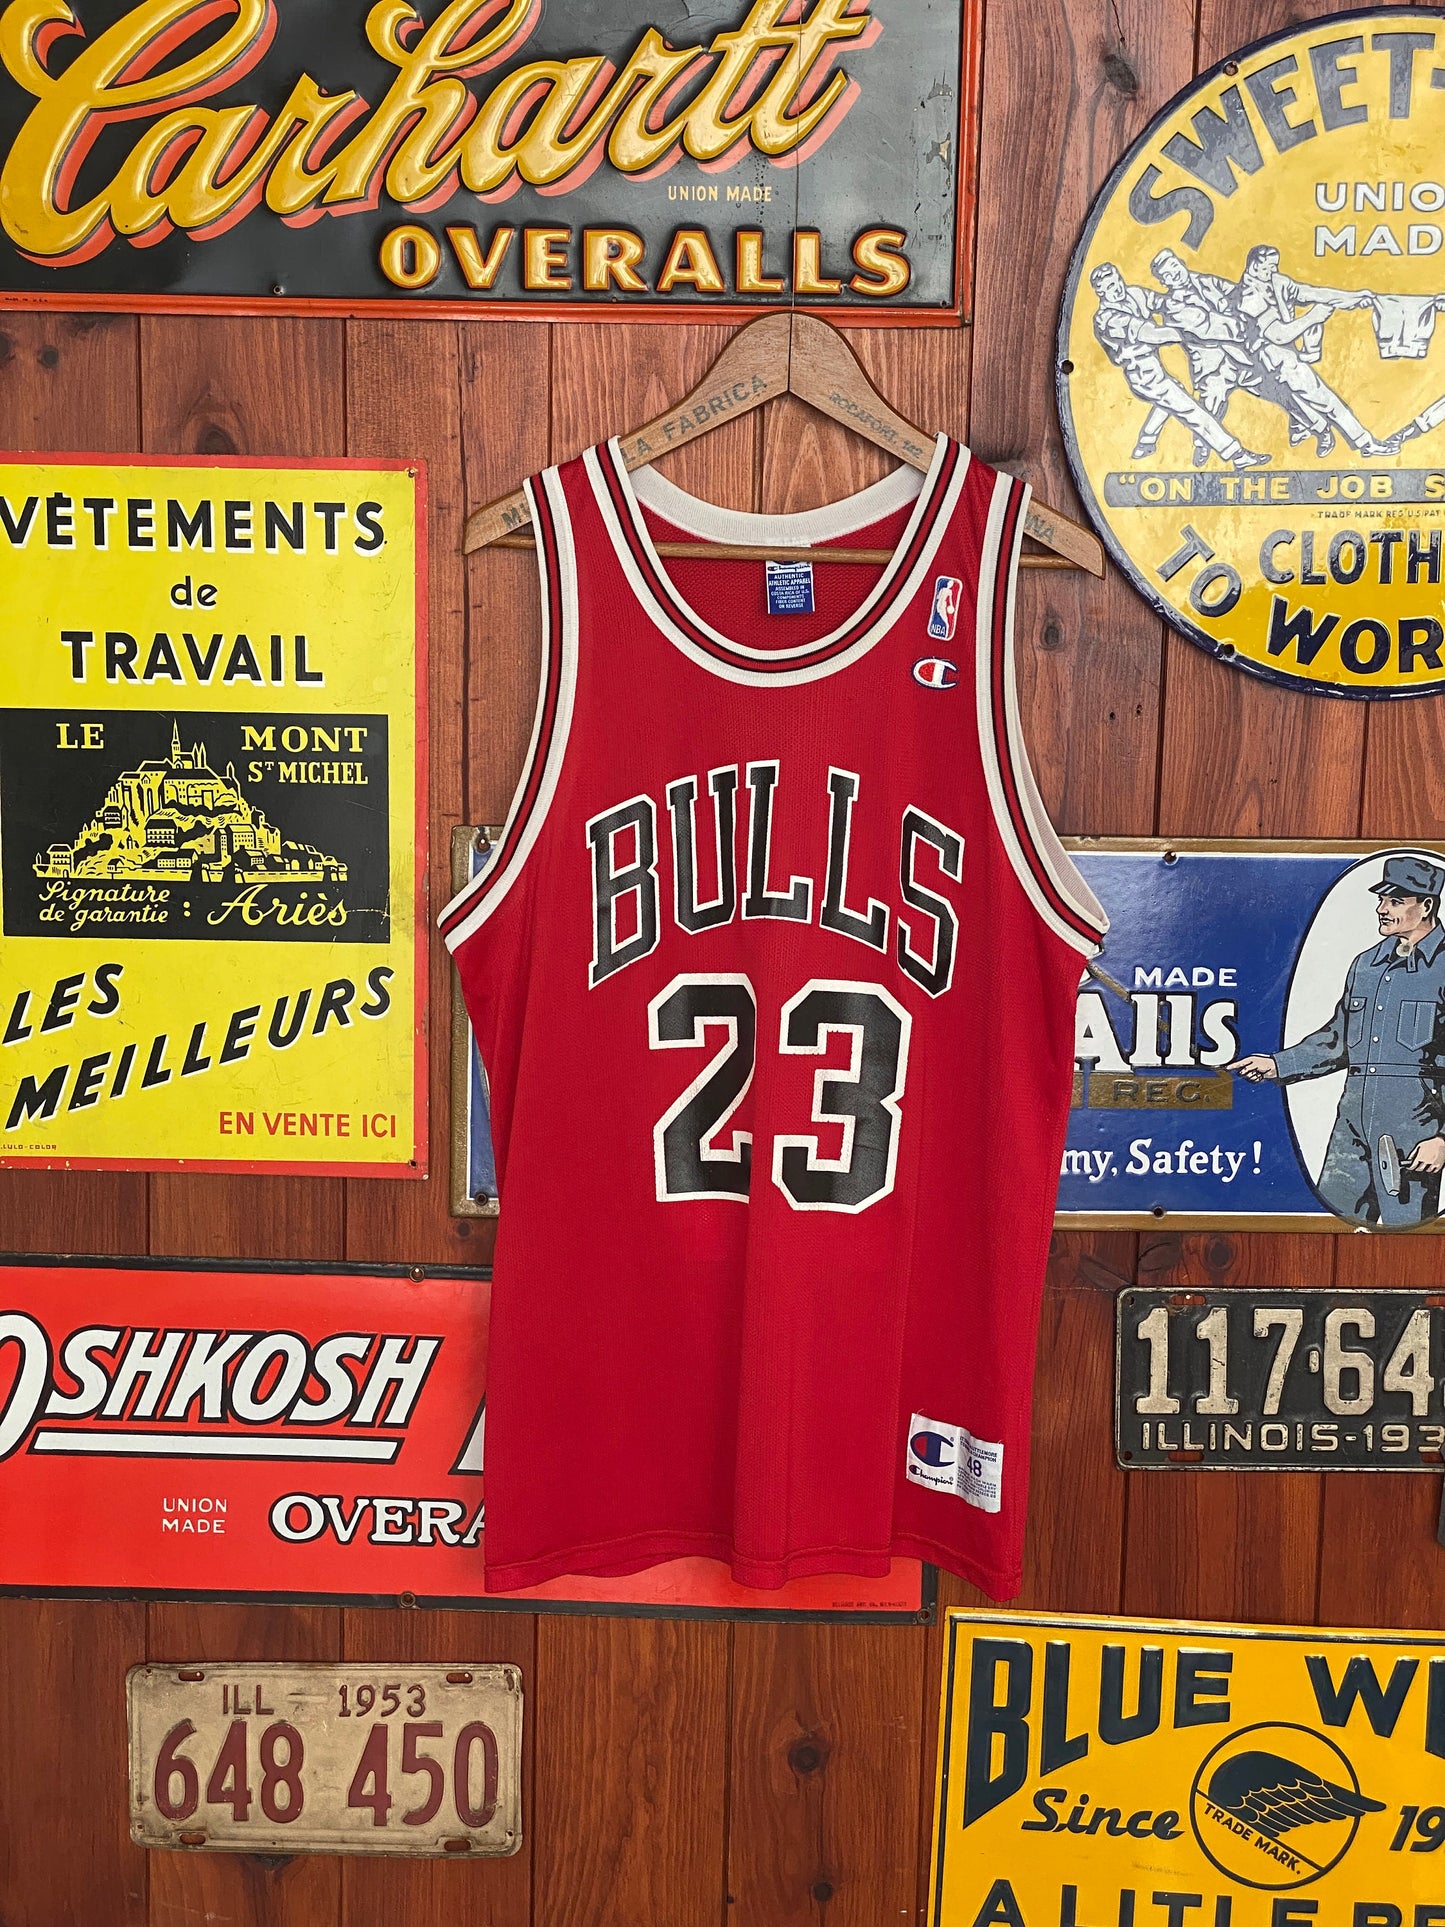 Size 48. Vintage 90s Bulls NBA jersey, Player Jordan #23 Made by Champion